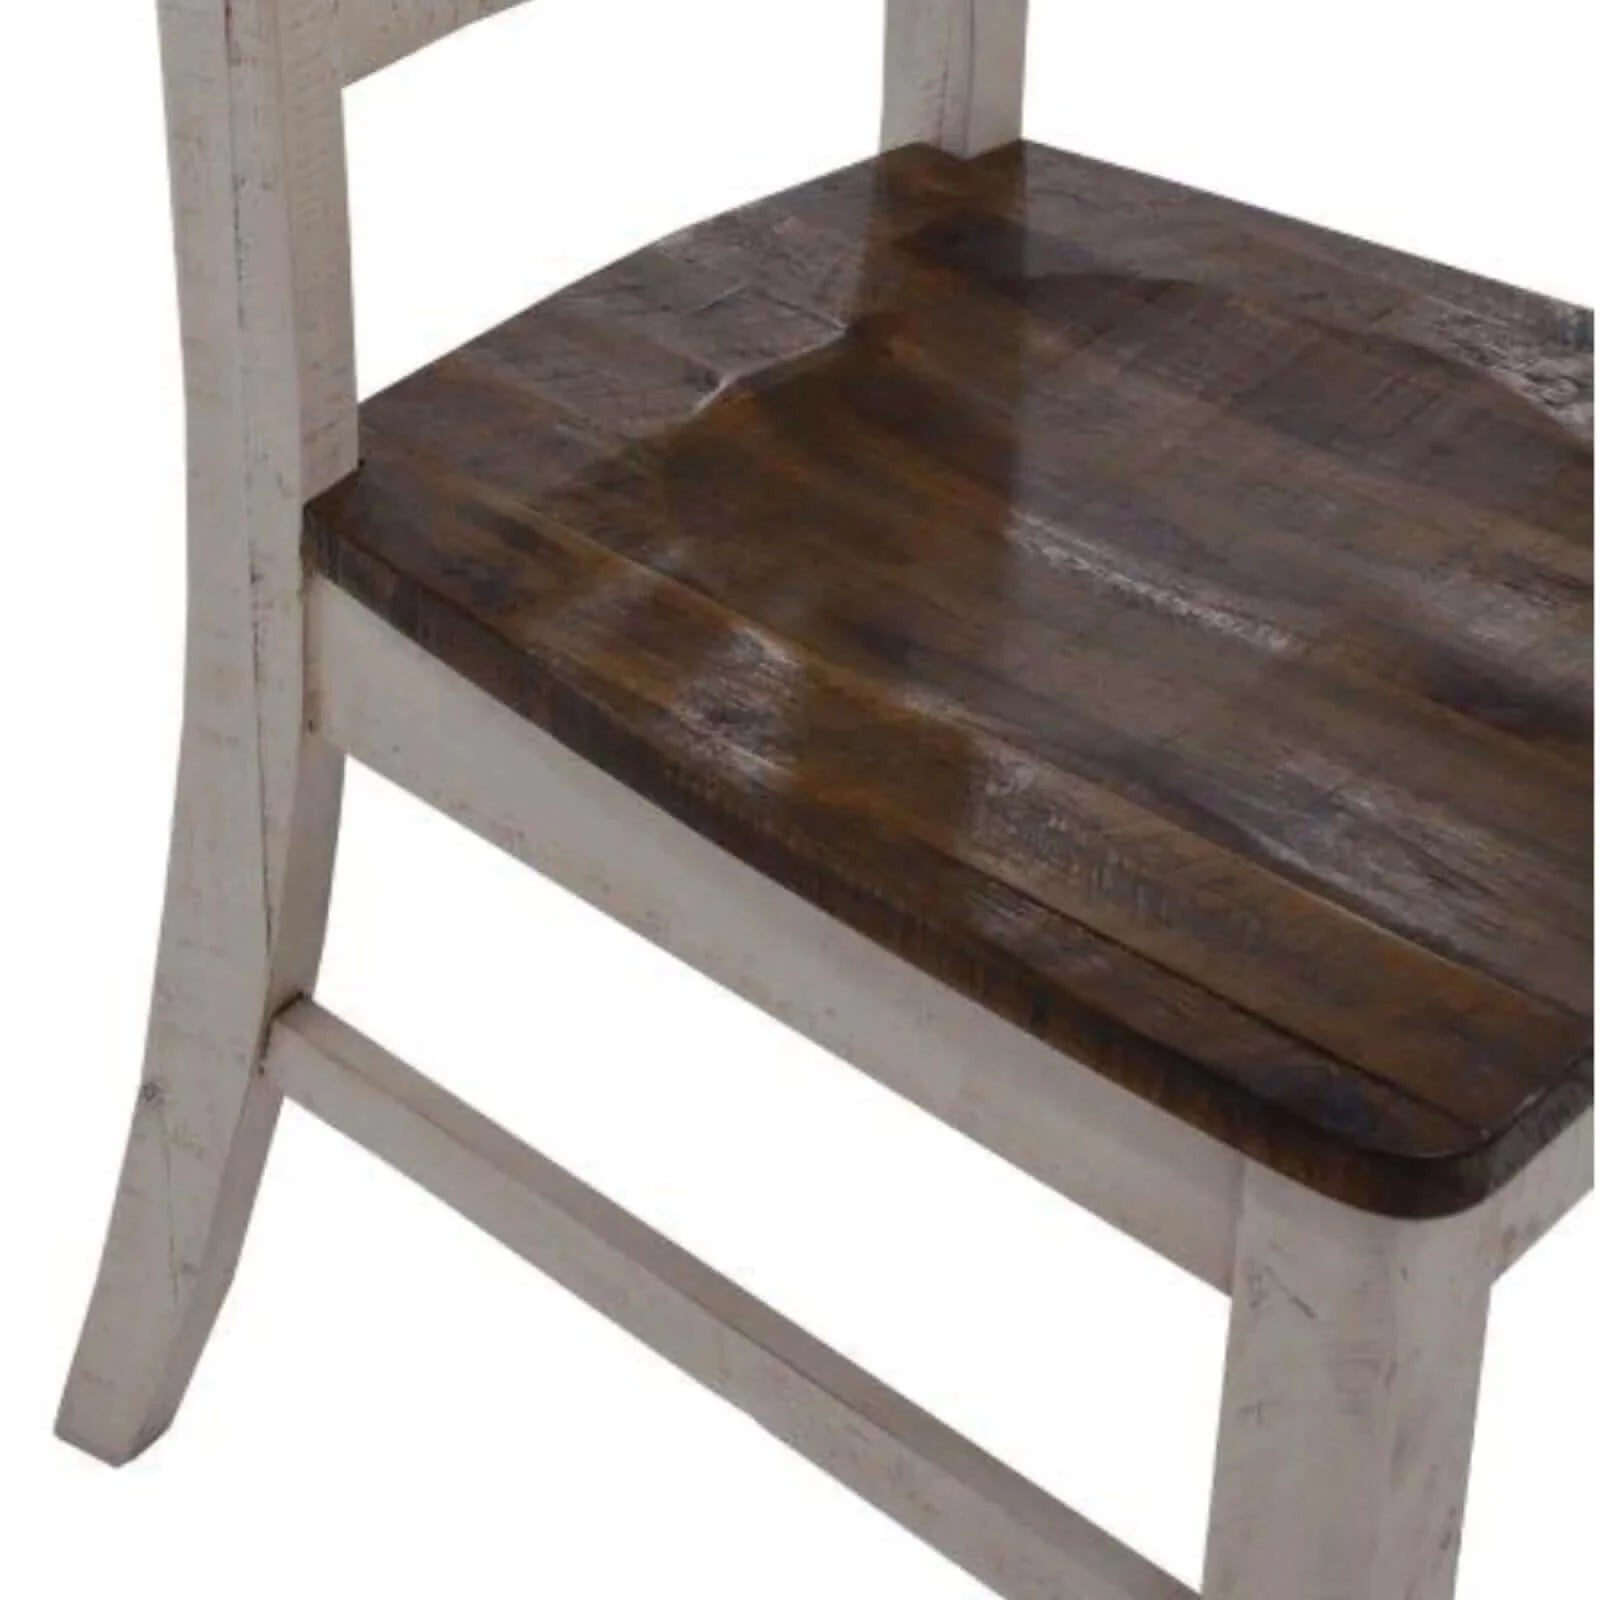 Buy erica x-back dining chair set of 2 solid acacia timber wood hampton brown white - upinteriors-Upinteriors